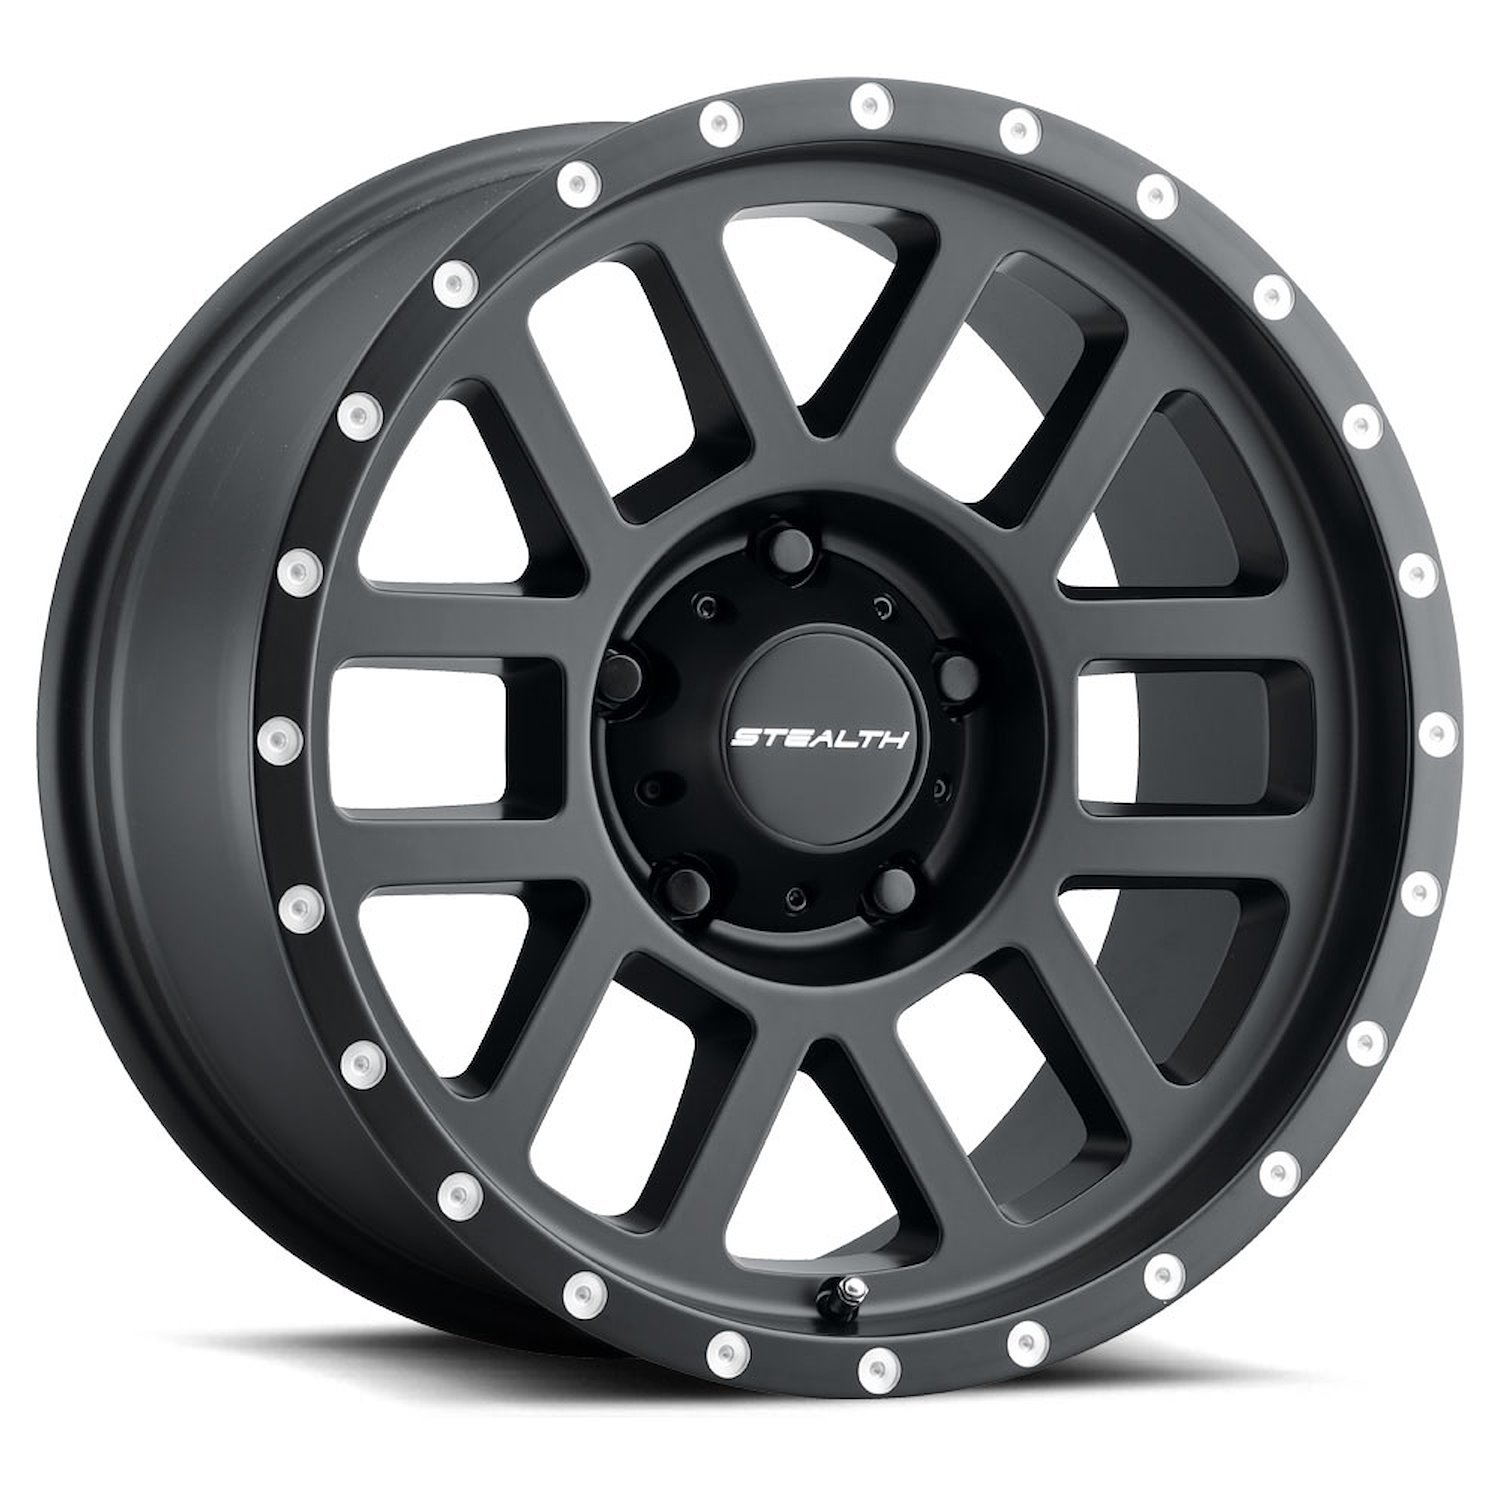 Machined Dimple Matte Black Stealth D-Window Wheel (Series 772) Size: 17" x 8.5